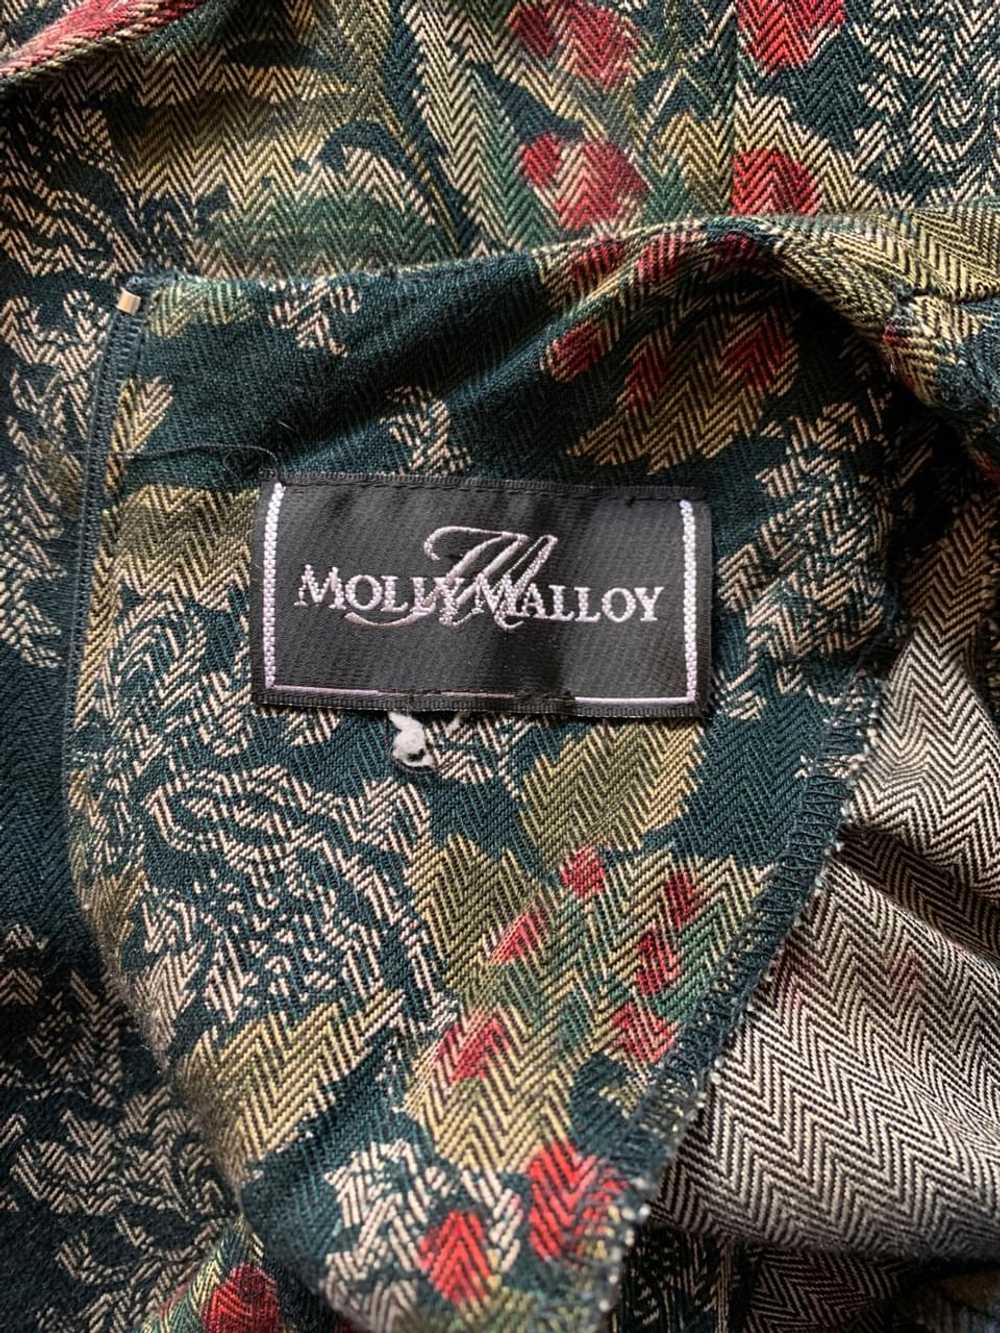 Molly Malloy Floral Maxi Dress (L/xl) - image 4